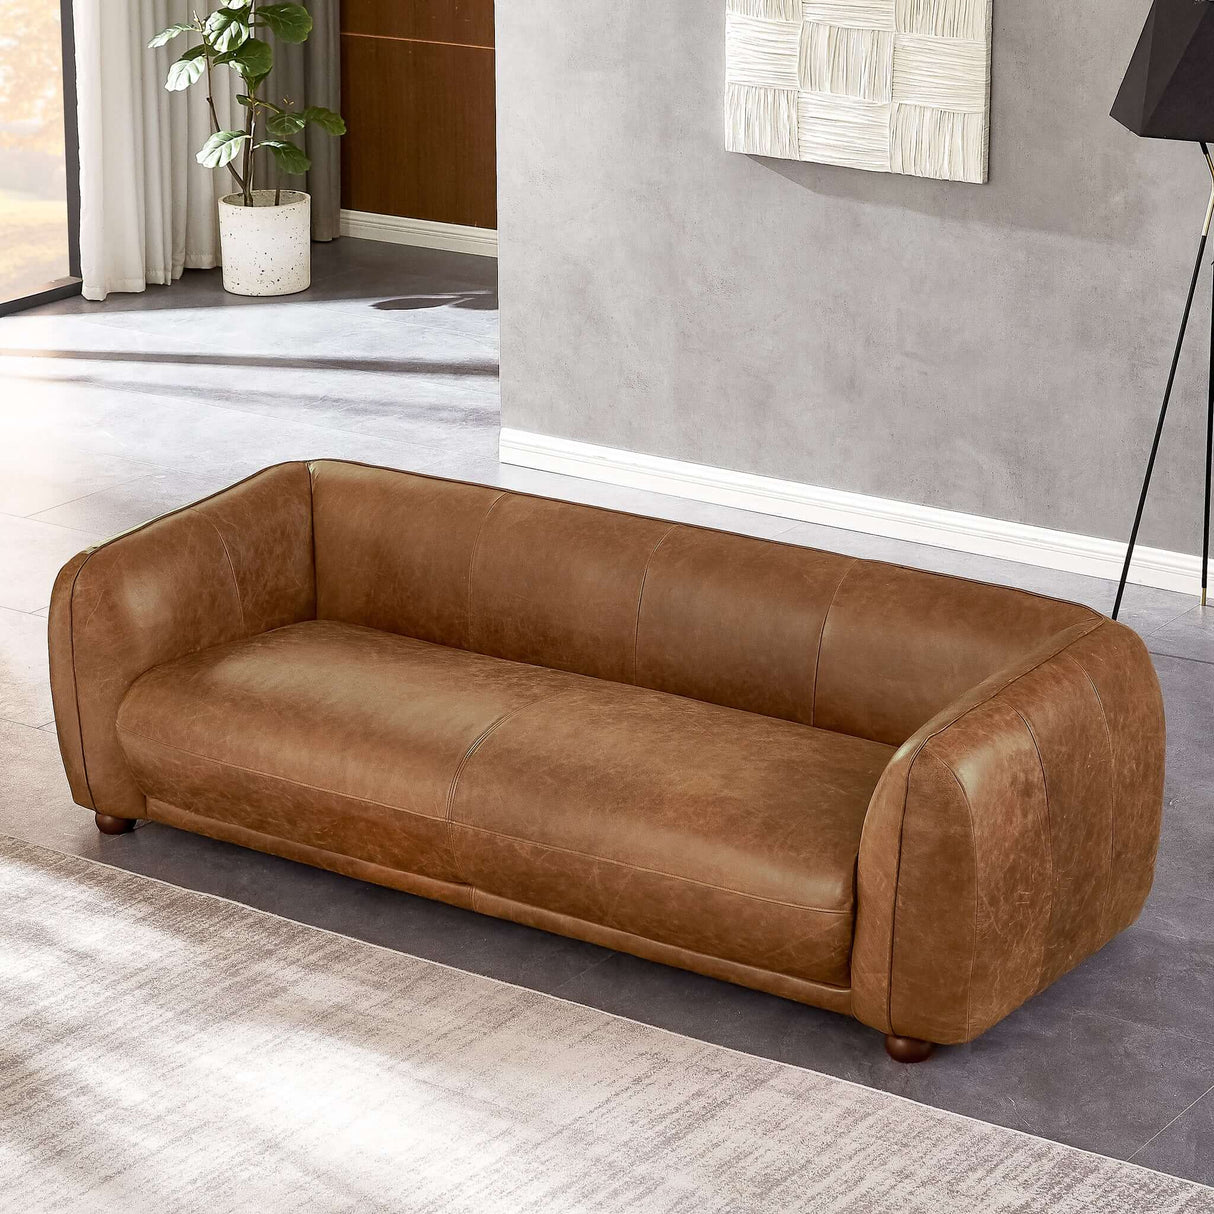 Marlon Luxury Italian Leather Sofa Green